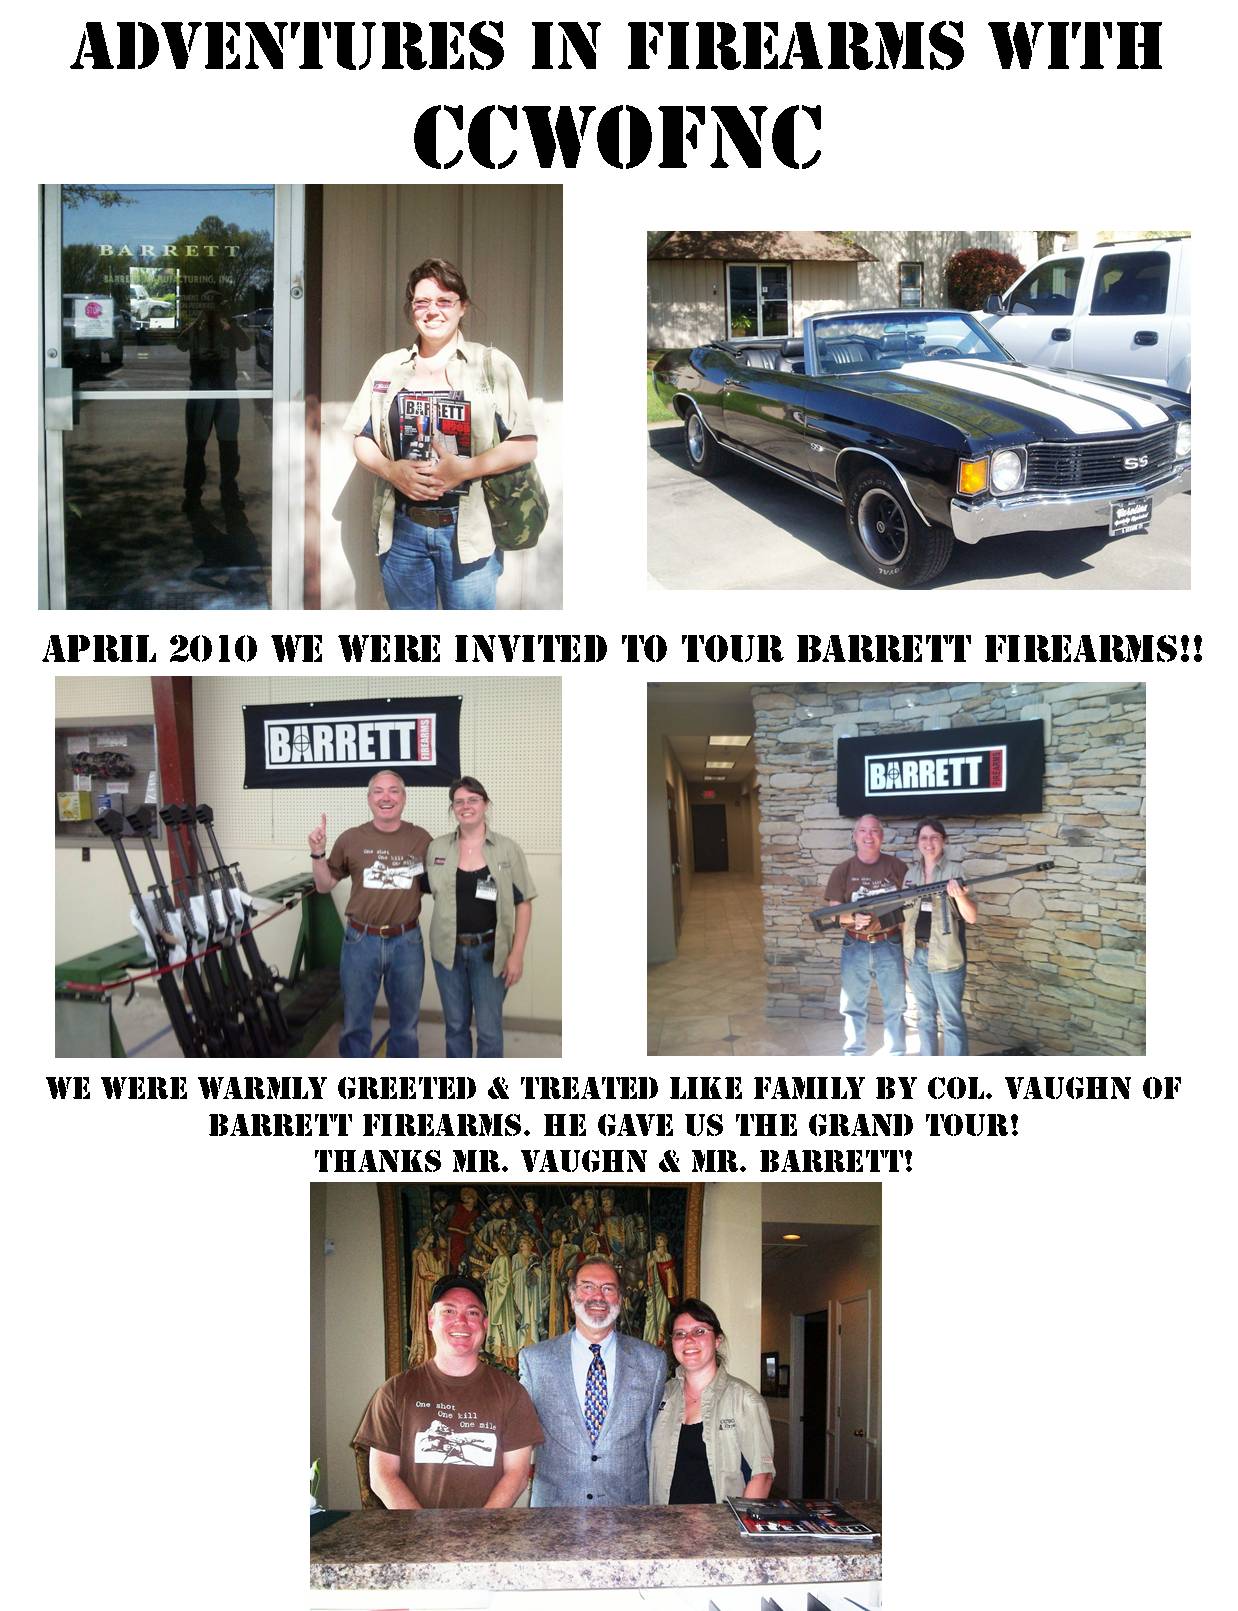 We toured Barrett in 2010!